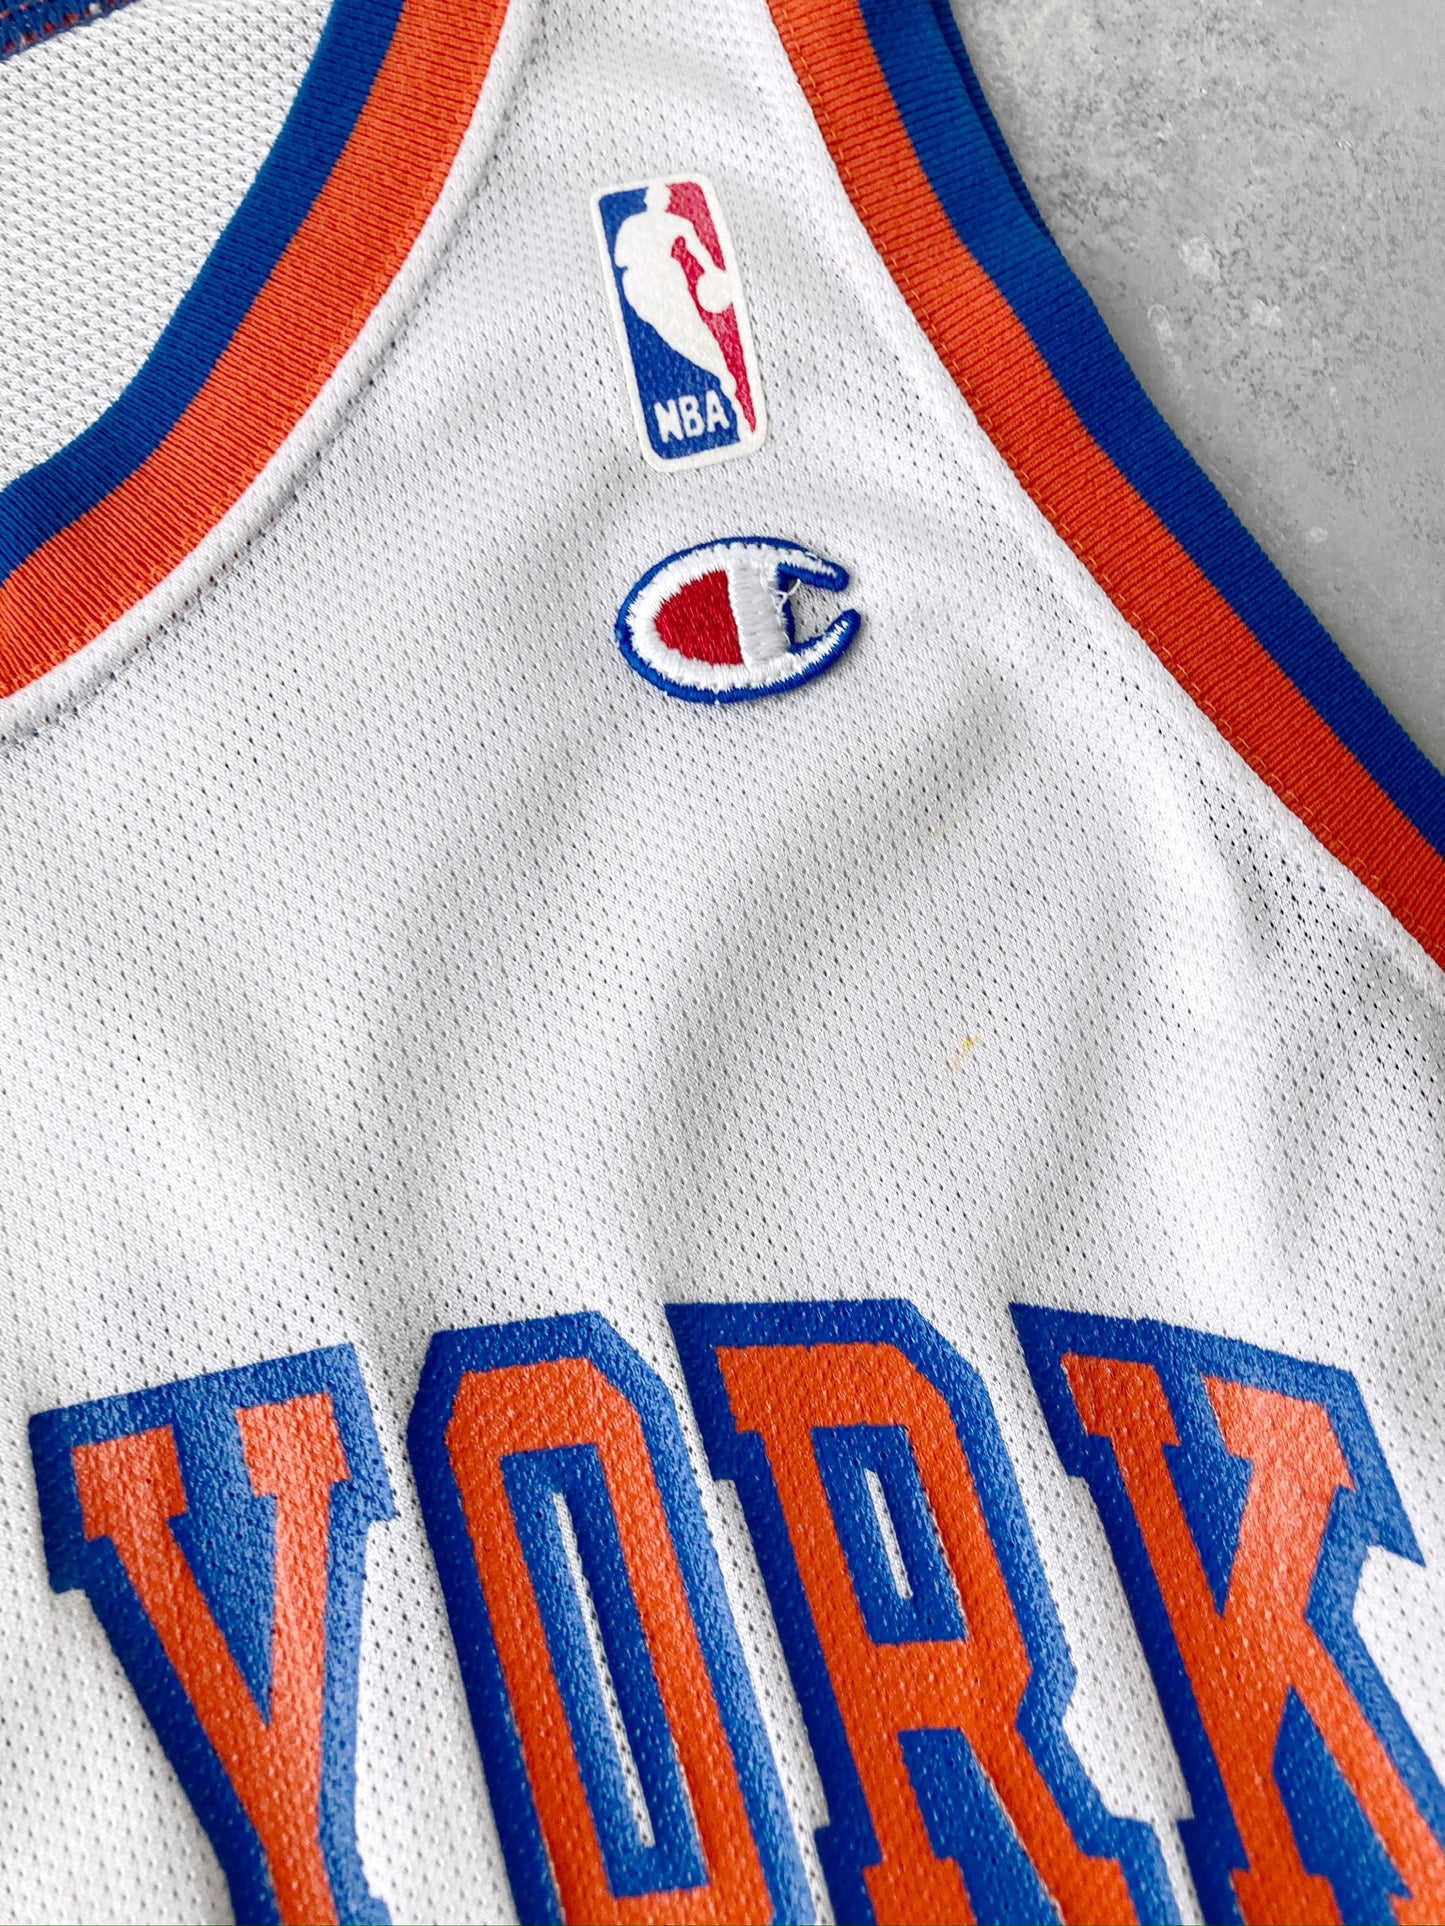 New York Knicks Jersey 90's - Large